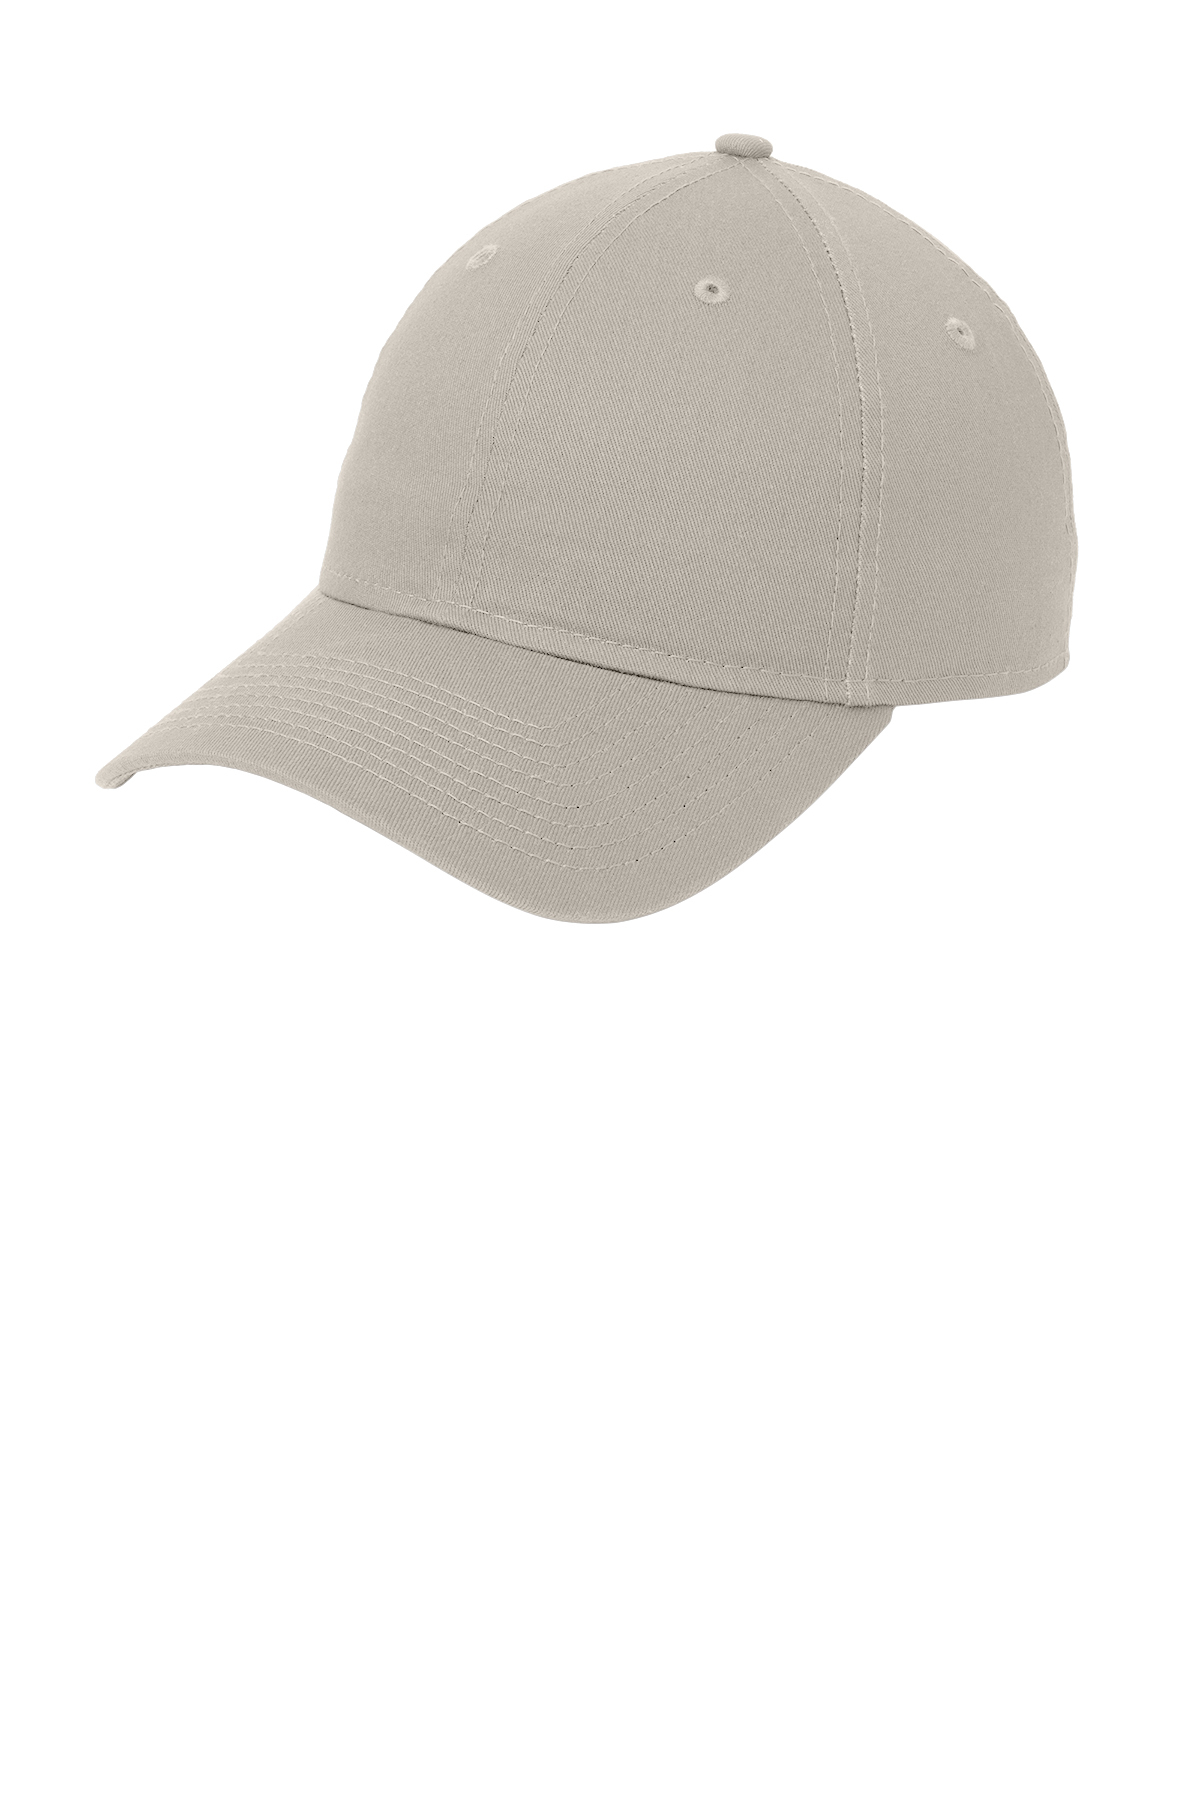 New Tommy Bahama Baseball Caps Hats Strap Mesh Net White Grey Khaki Blue